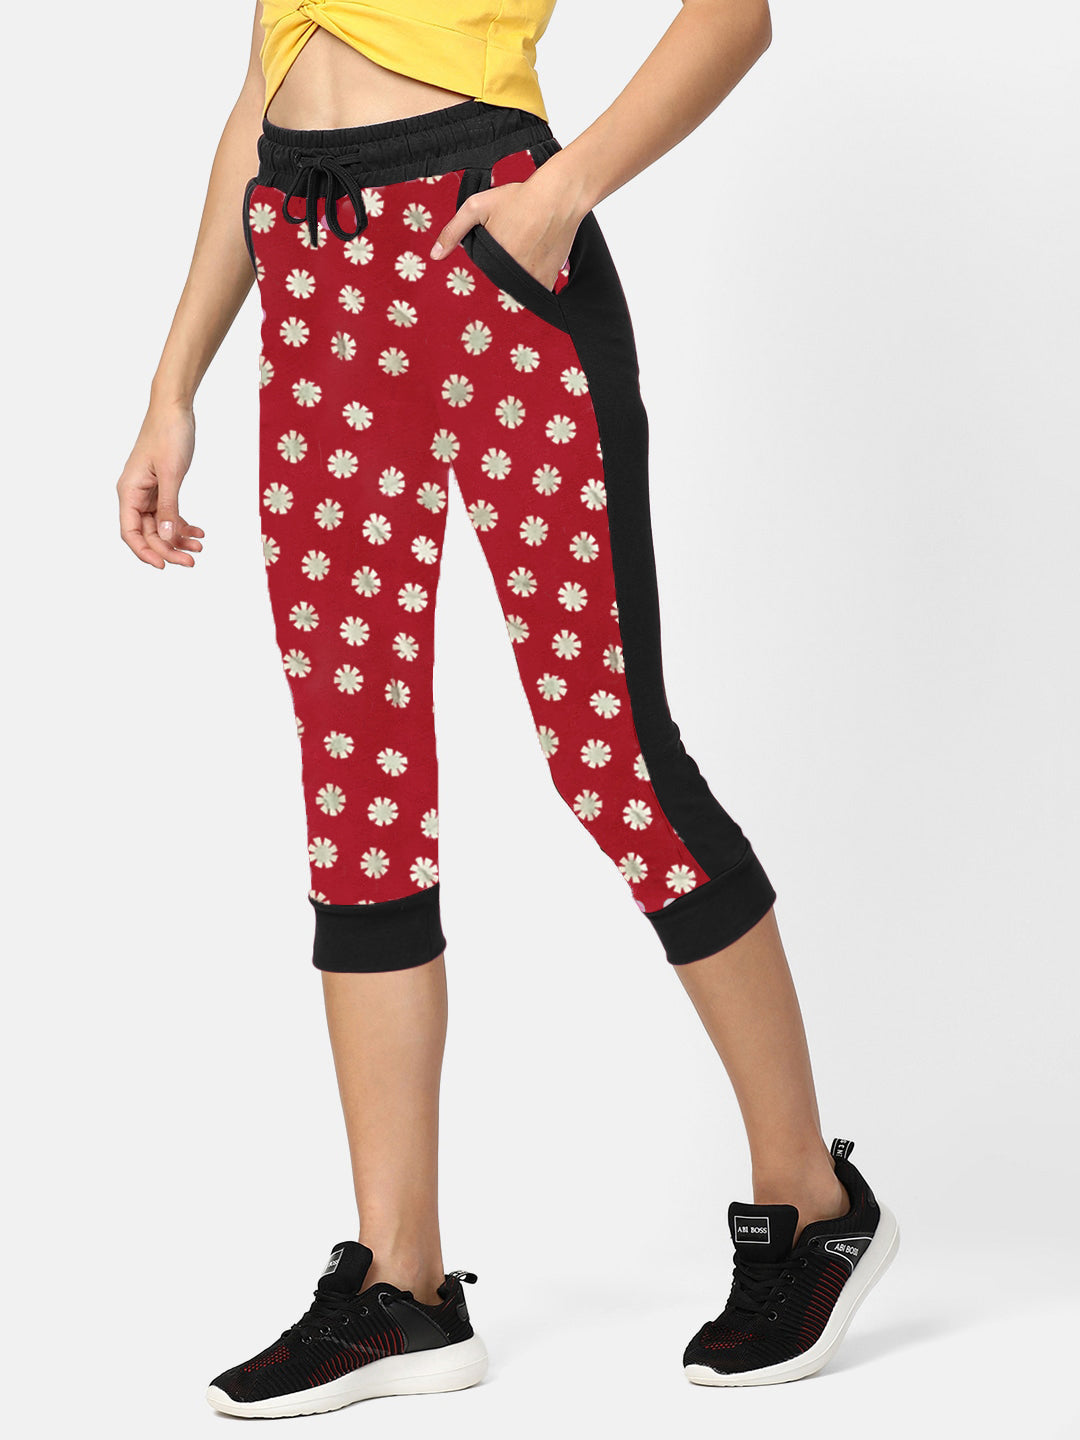 Next Cotton Stylish Capri For Ladies-Red & Allover Print with Black Stripe-SP1595